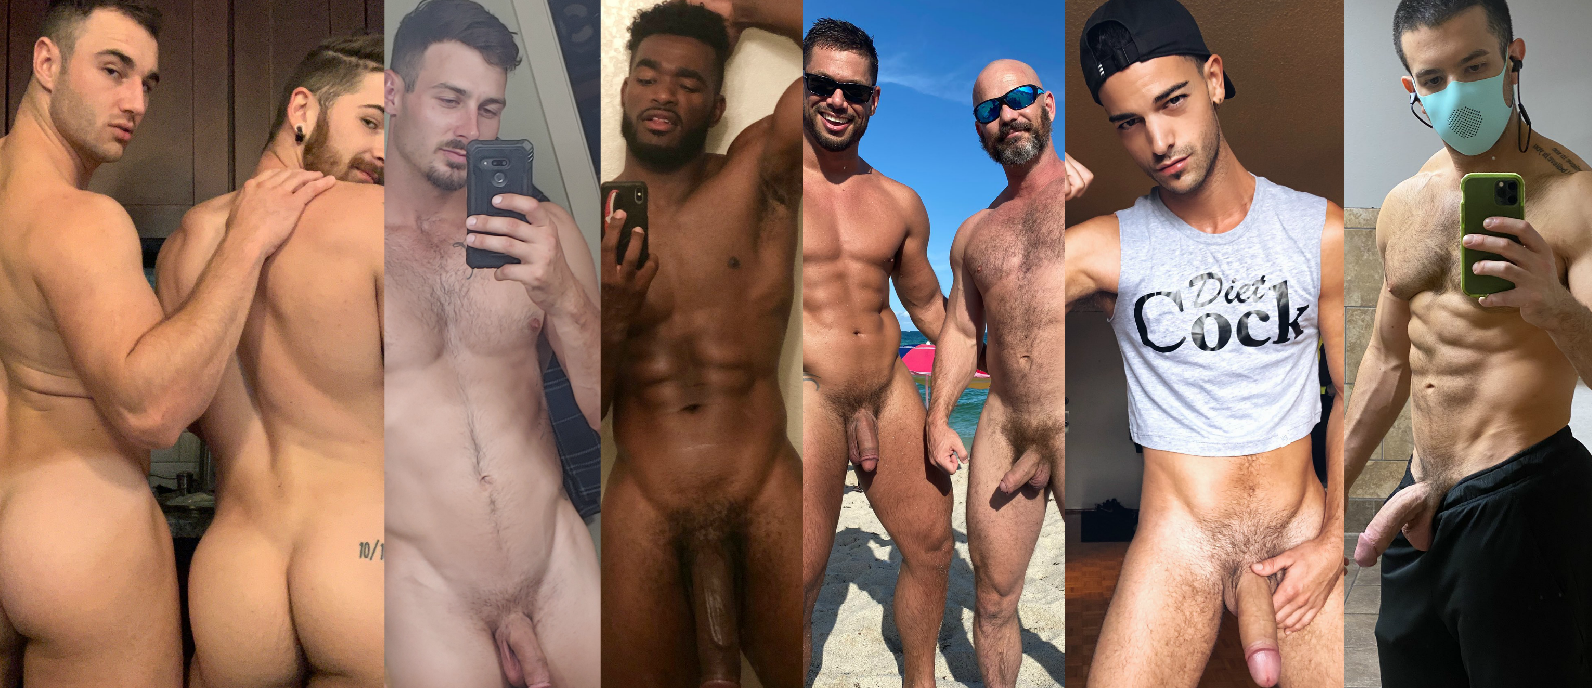 top gay porn sites tumblr